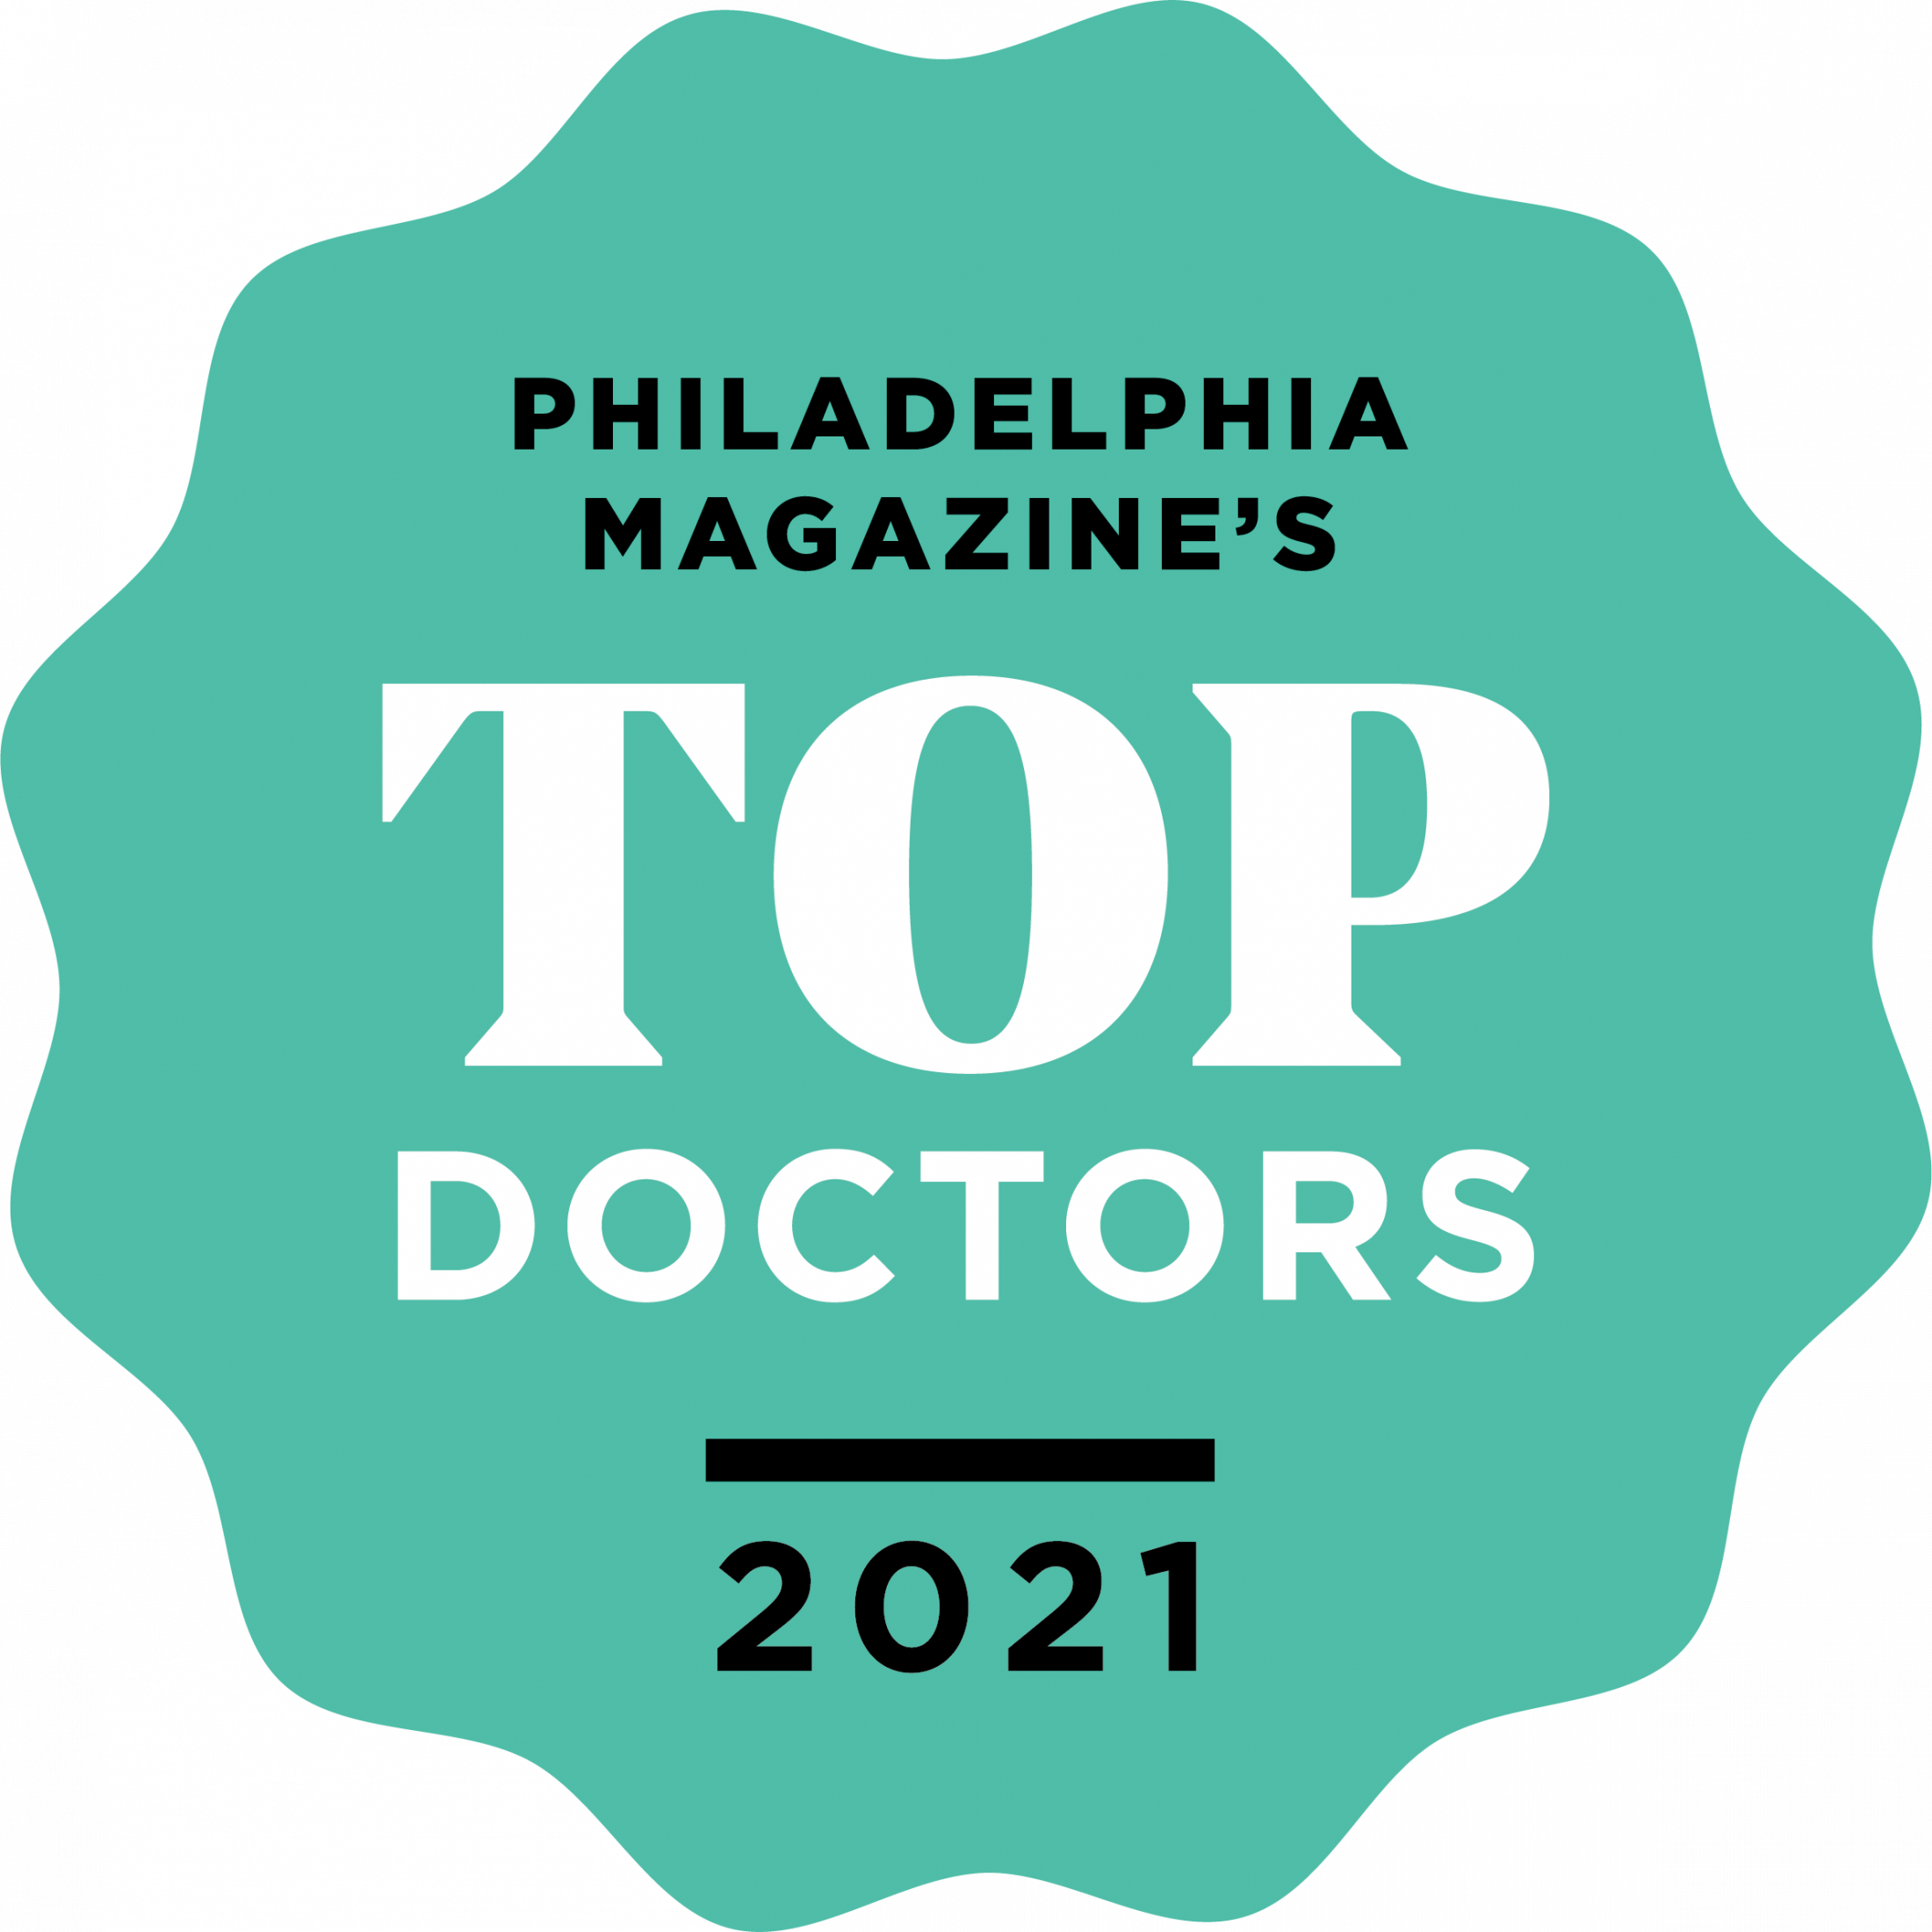 Top Doctor's Magazine Winners Badge 2021